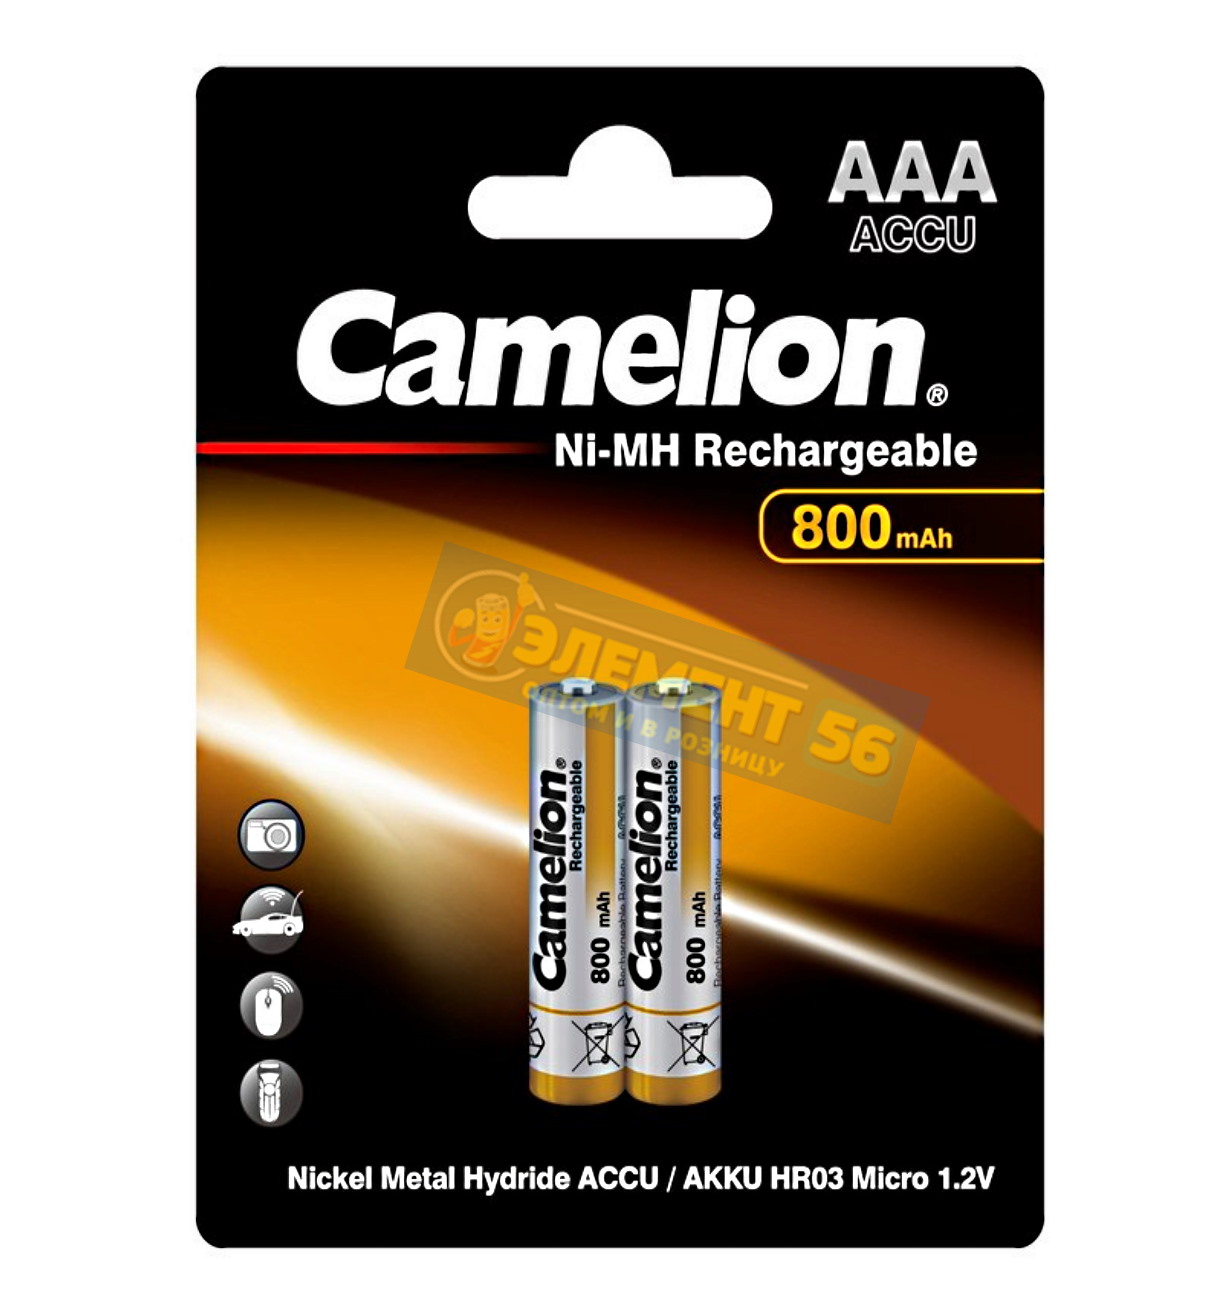 Аккумулятор CAMELION AAA, HR03 (800 mAh) MN2400, А286, 24A, AM4, UM4, HP16 2BL (2) (24) (480)